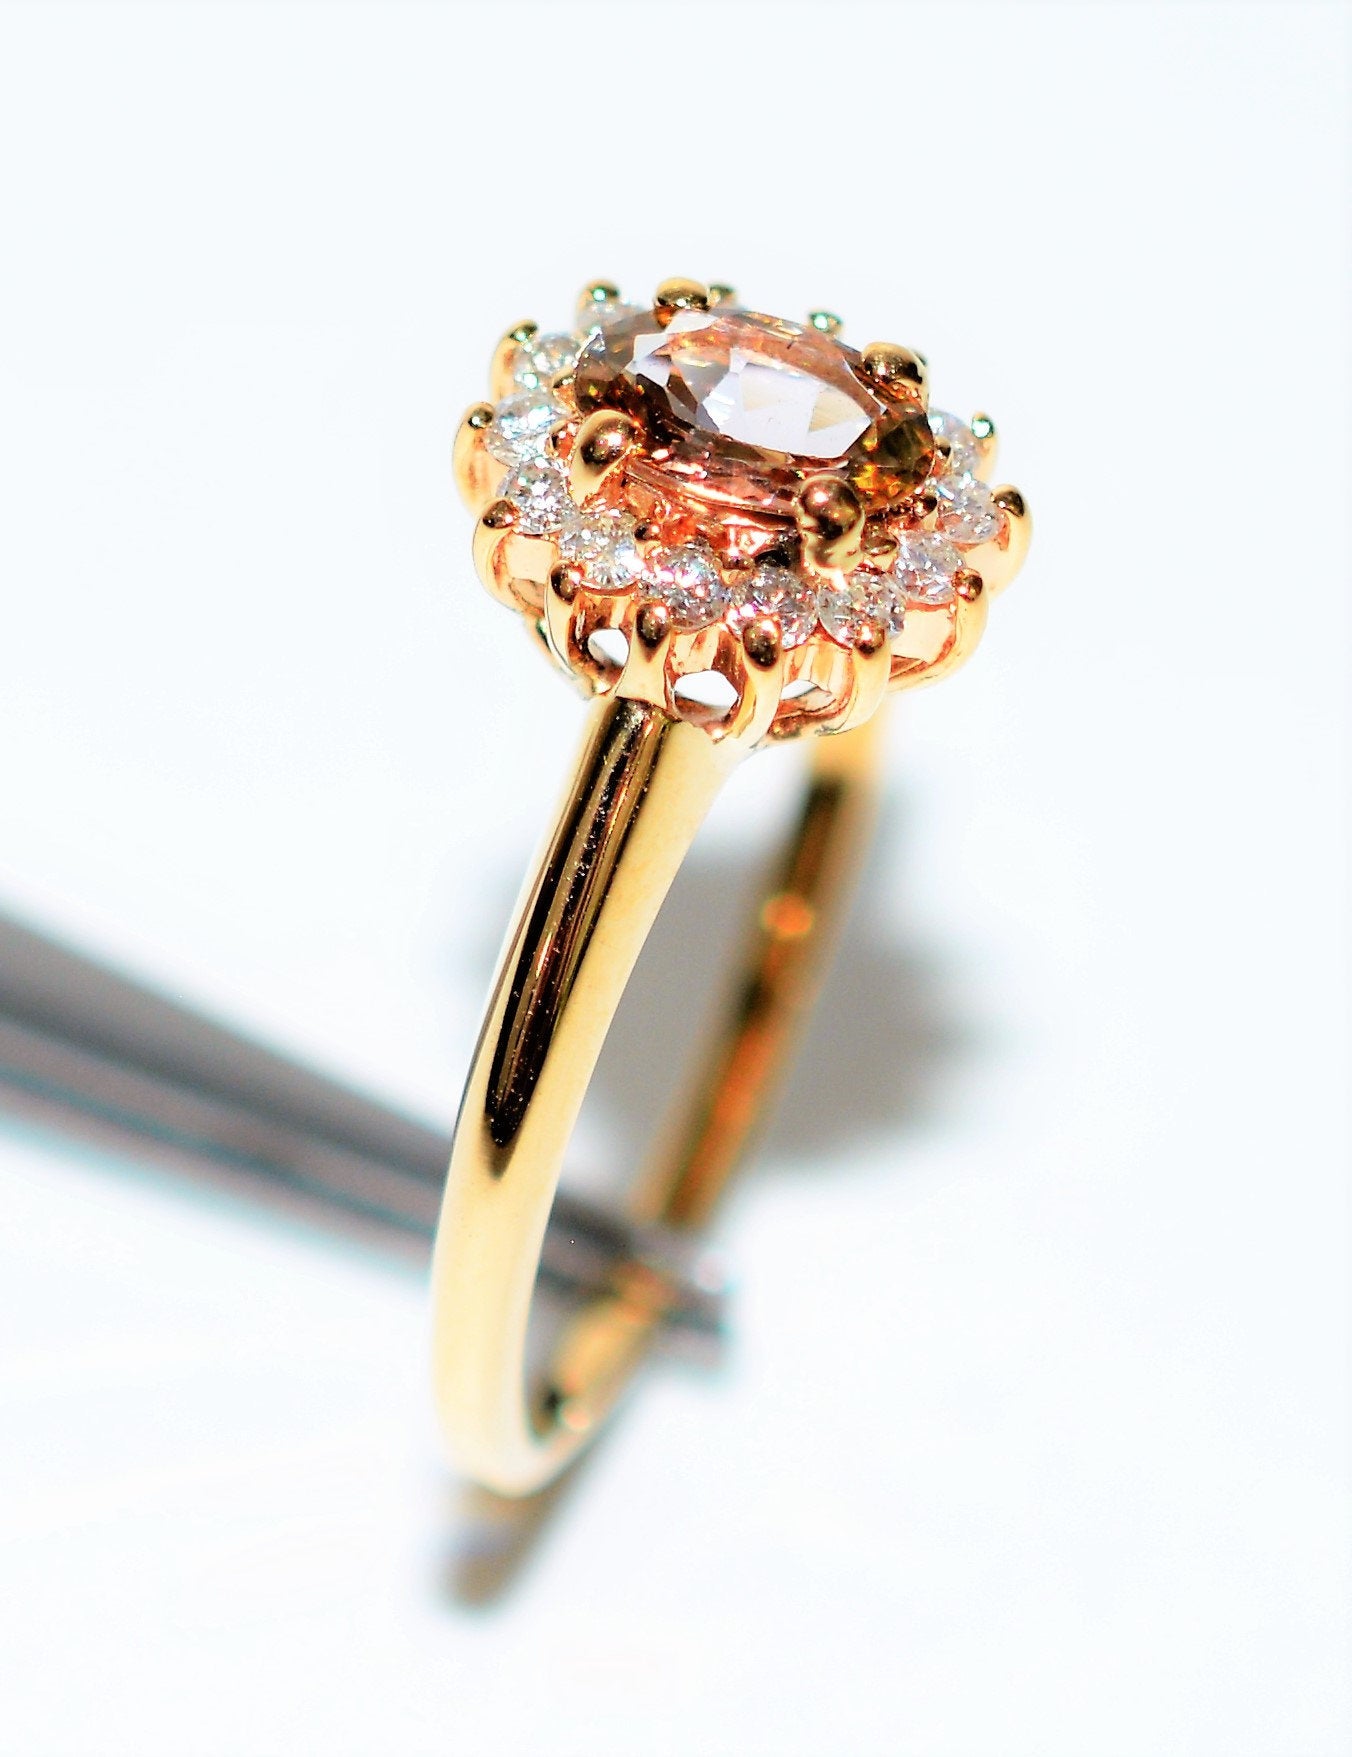 Natural Unheated Tanzanite & Diamond Ring 14K Solid Gold .65tcw Gemstone Ring Engagement Ring Diamond Halo Ring Vintage Ring Fashion Ring